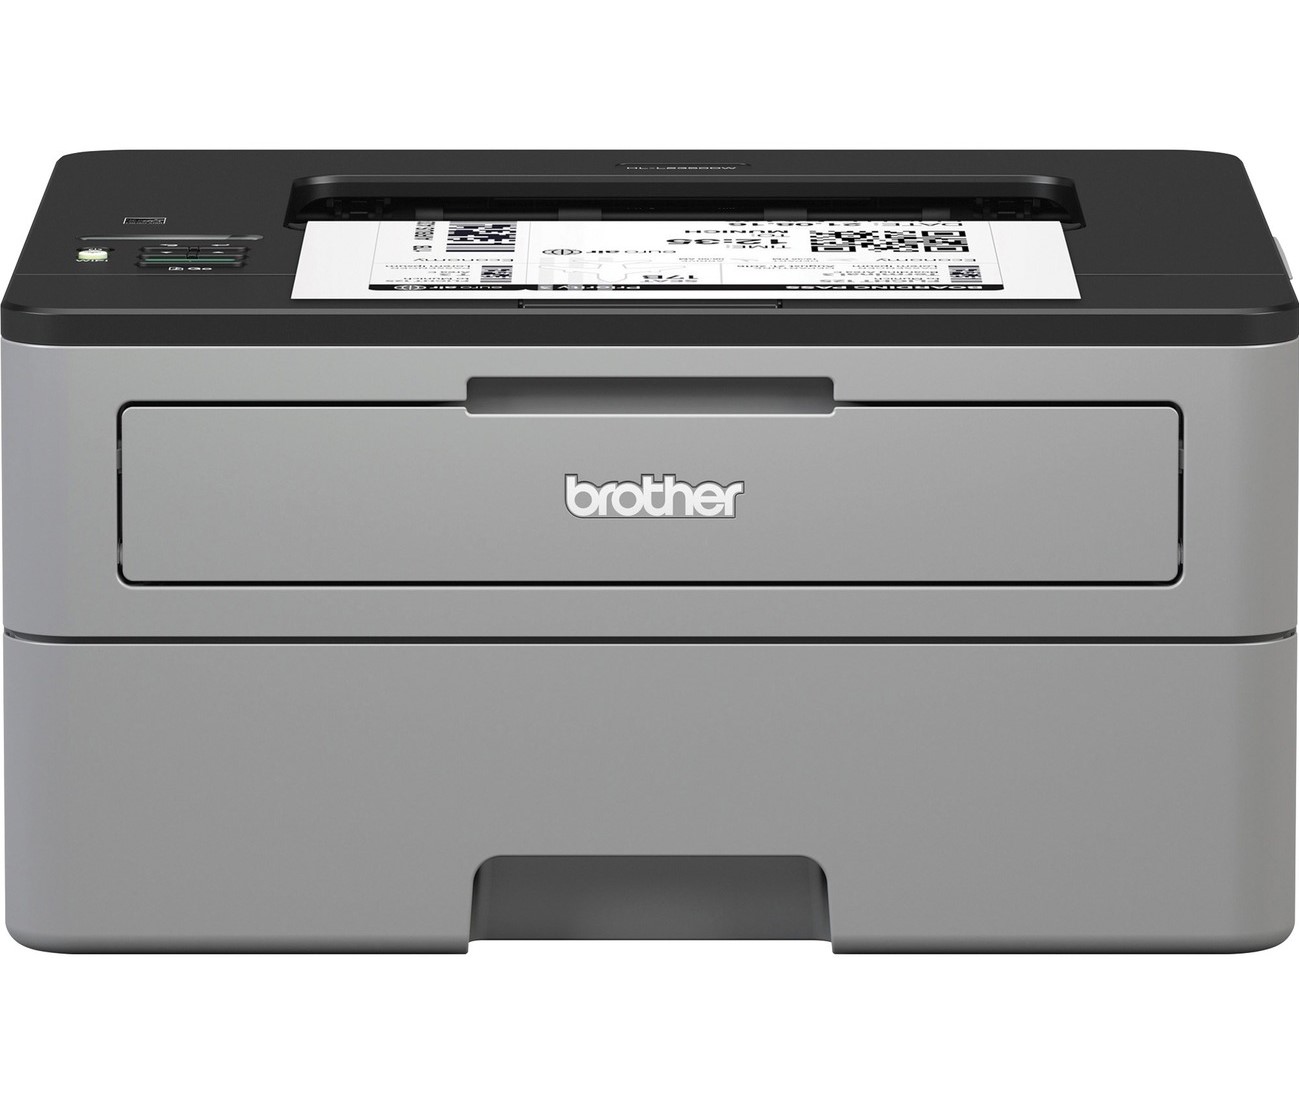 Brother Hl L2350dw Printer